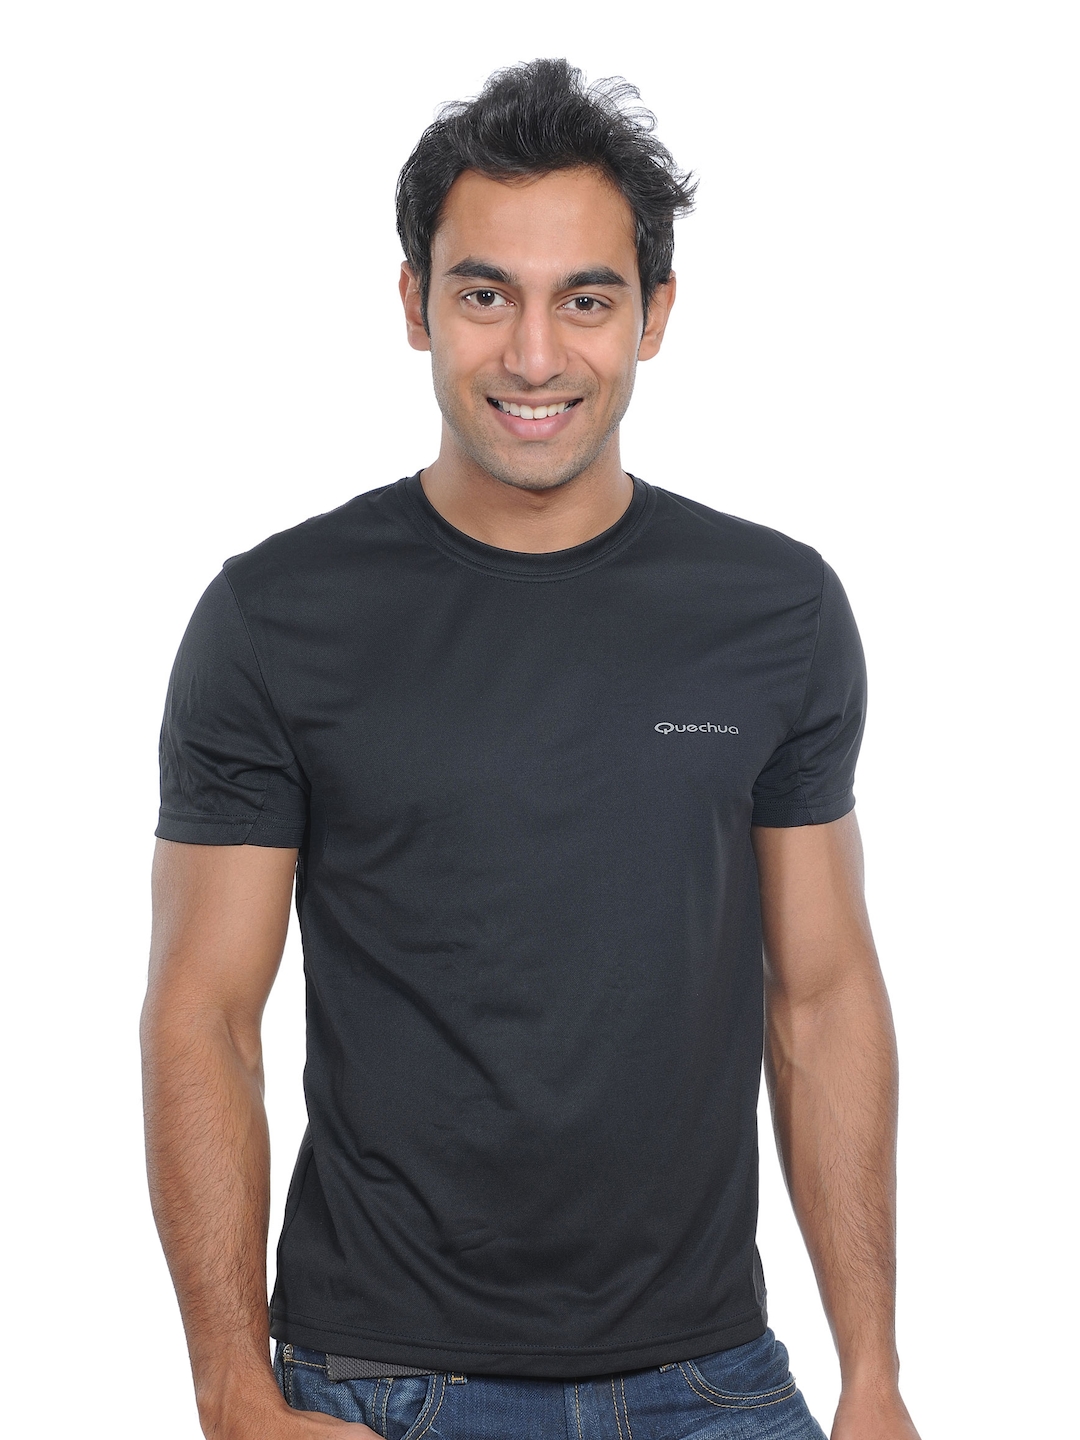 Decathlon Mens Black T Shirt 